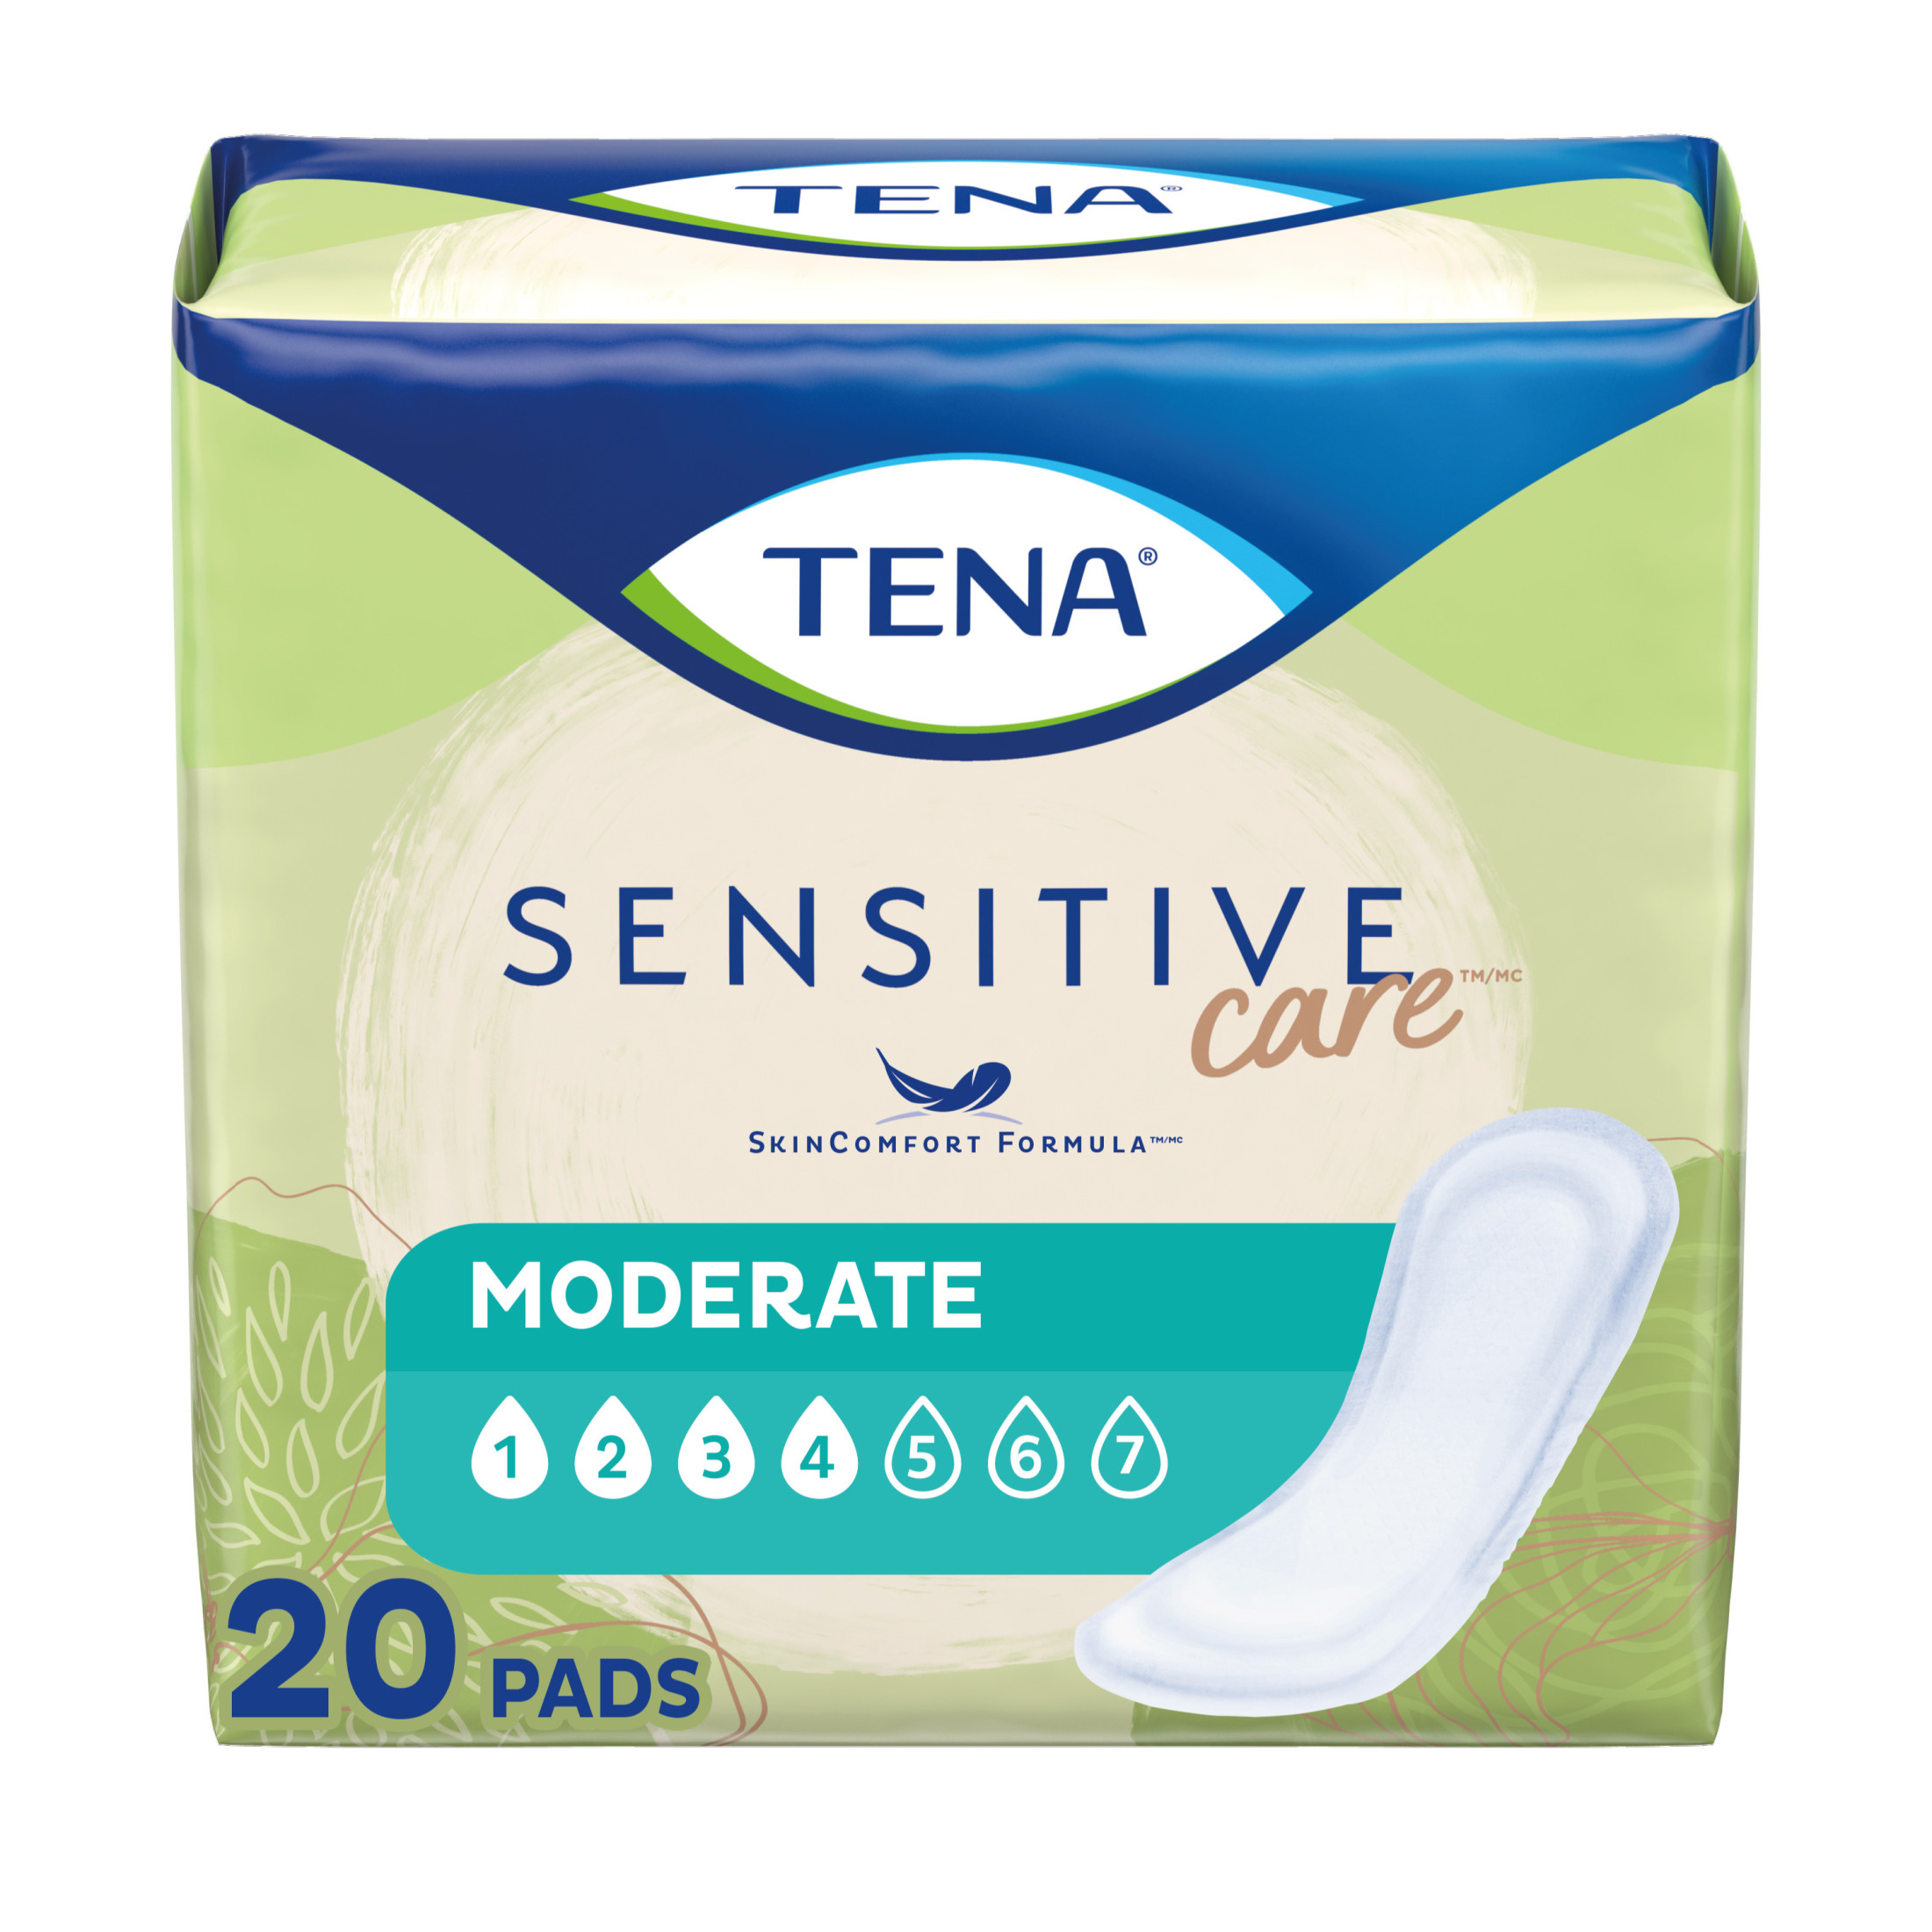 TENA Sensitive Care Moderate Regular Length Incontinence Pad, 20 Ct - image 1 of 7